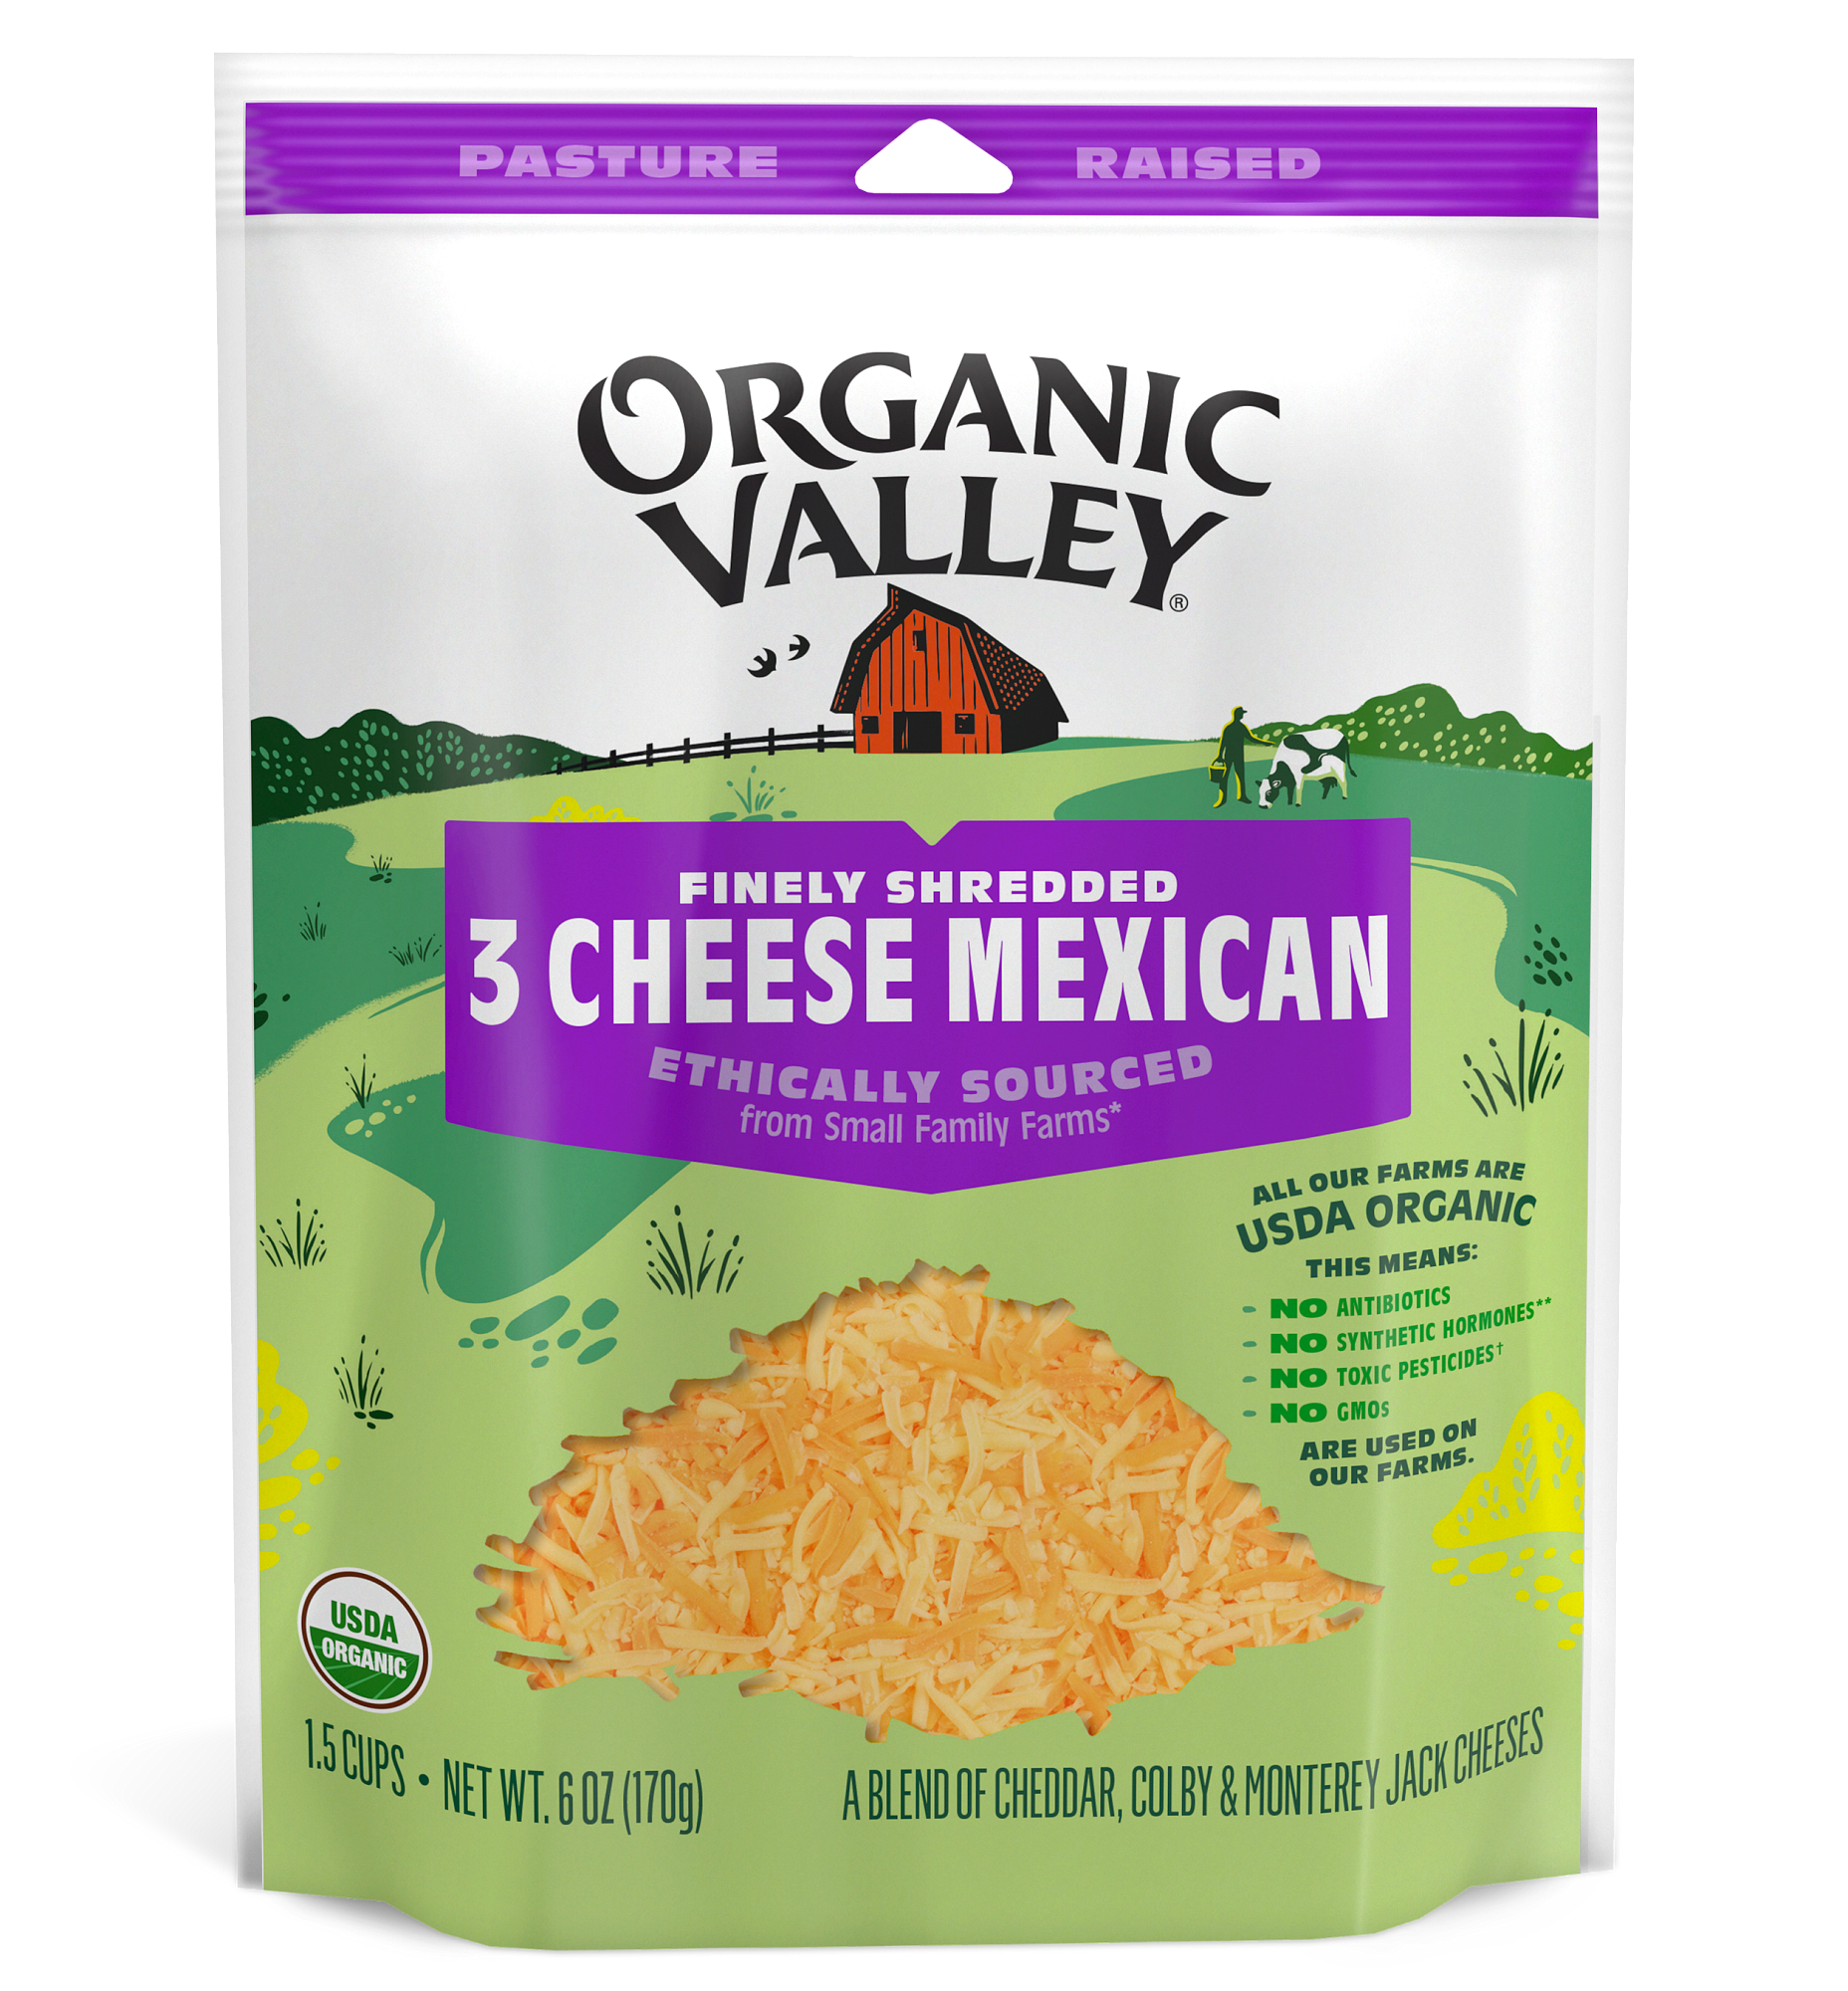 Organic Valley Butter Clarified Ghee 7.5 oz – California Ranch Market